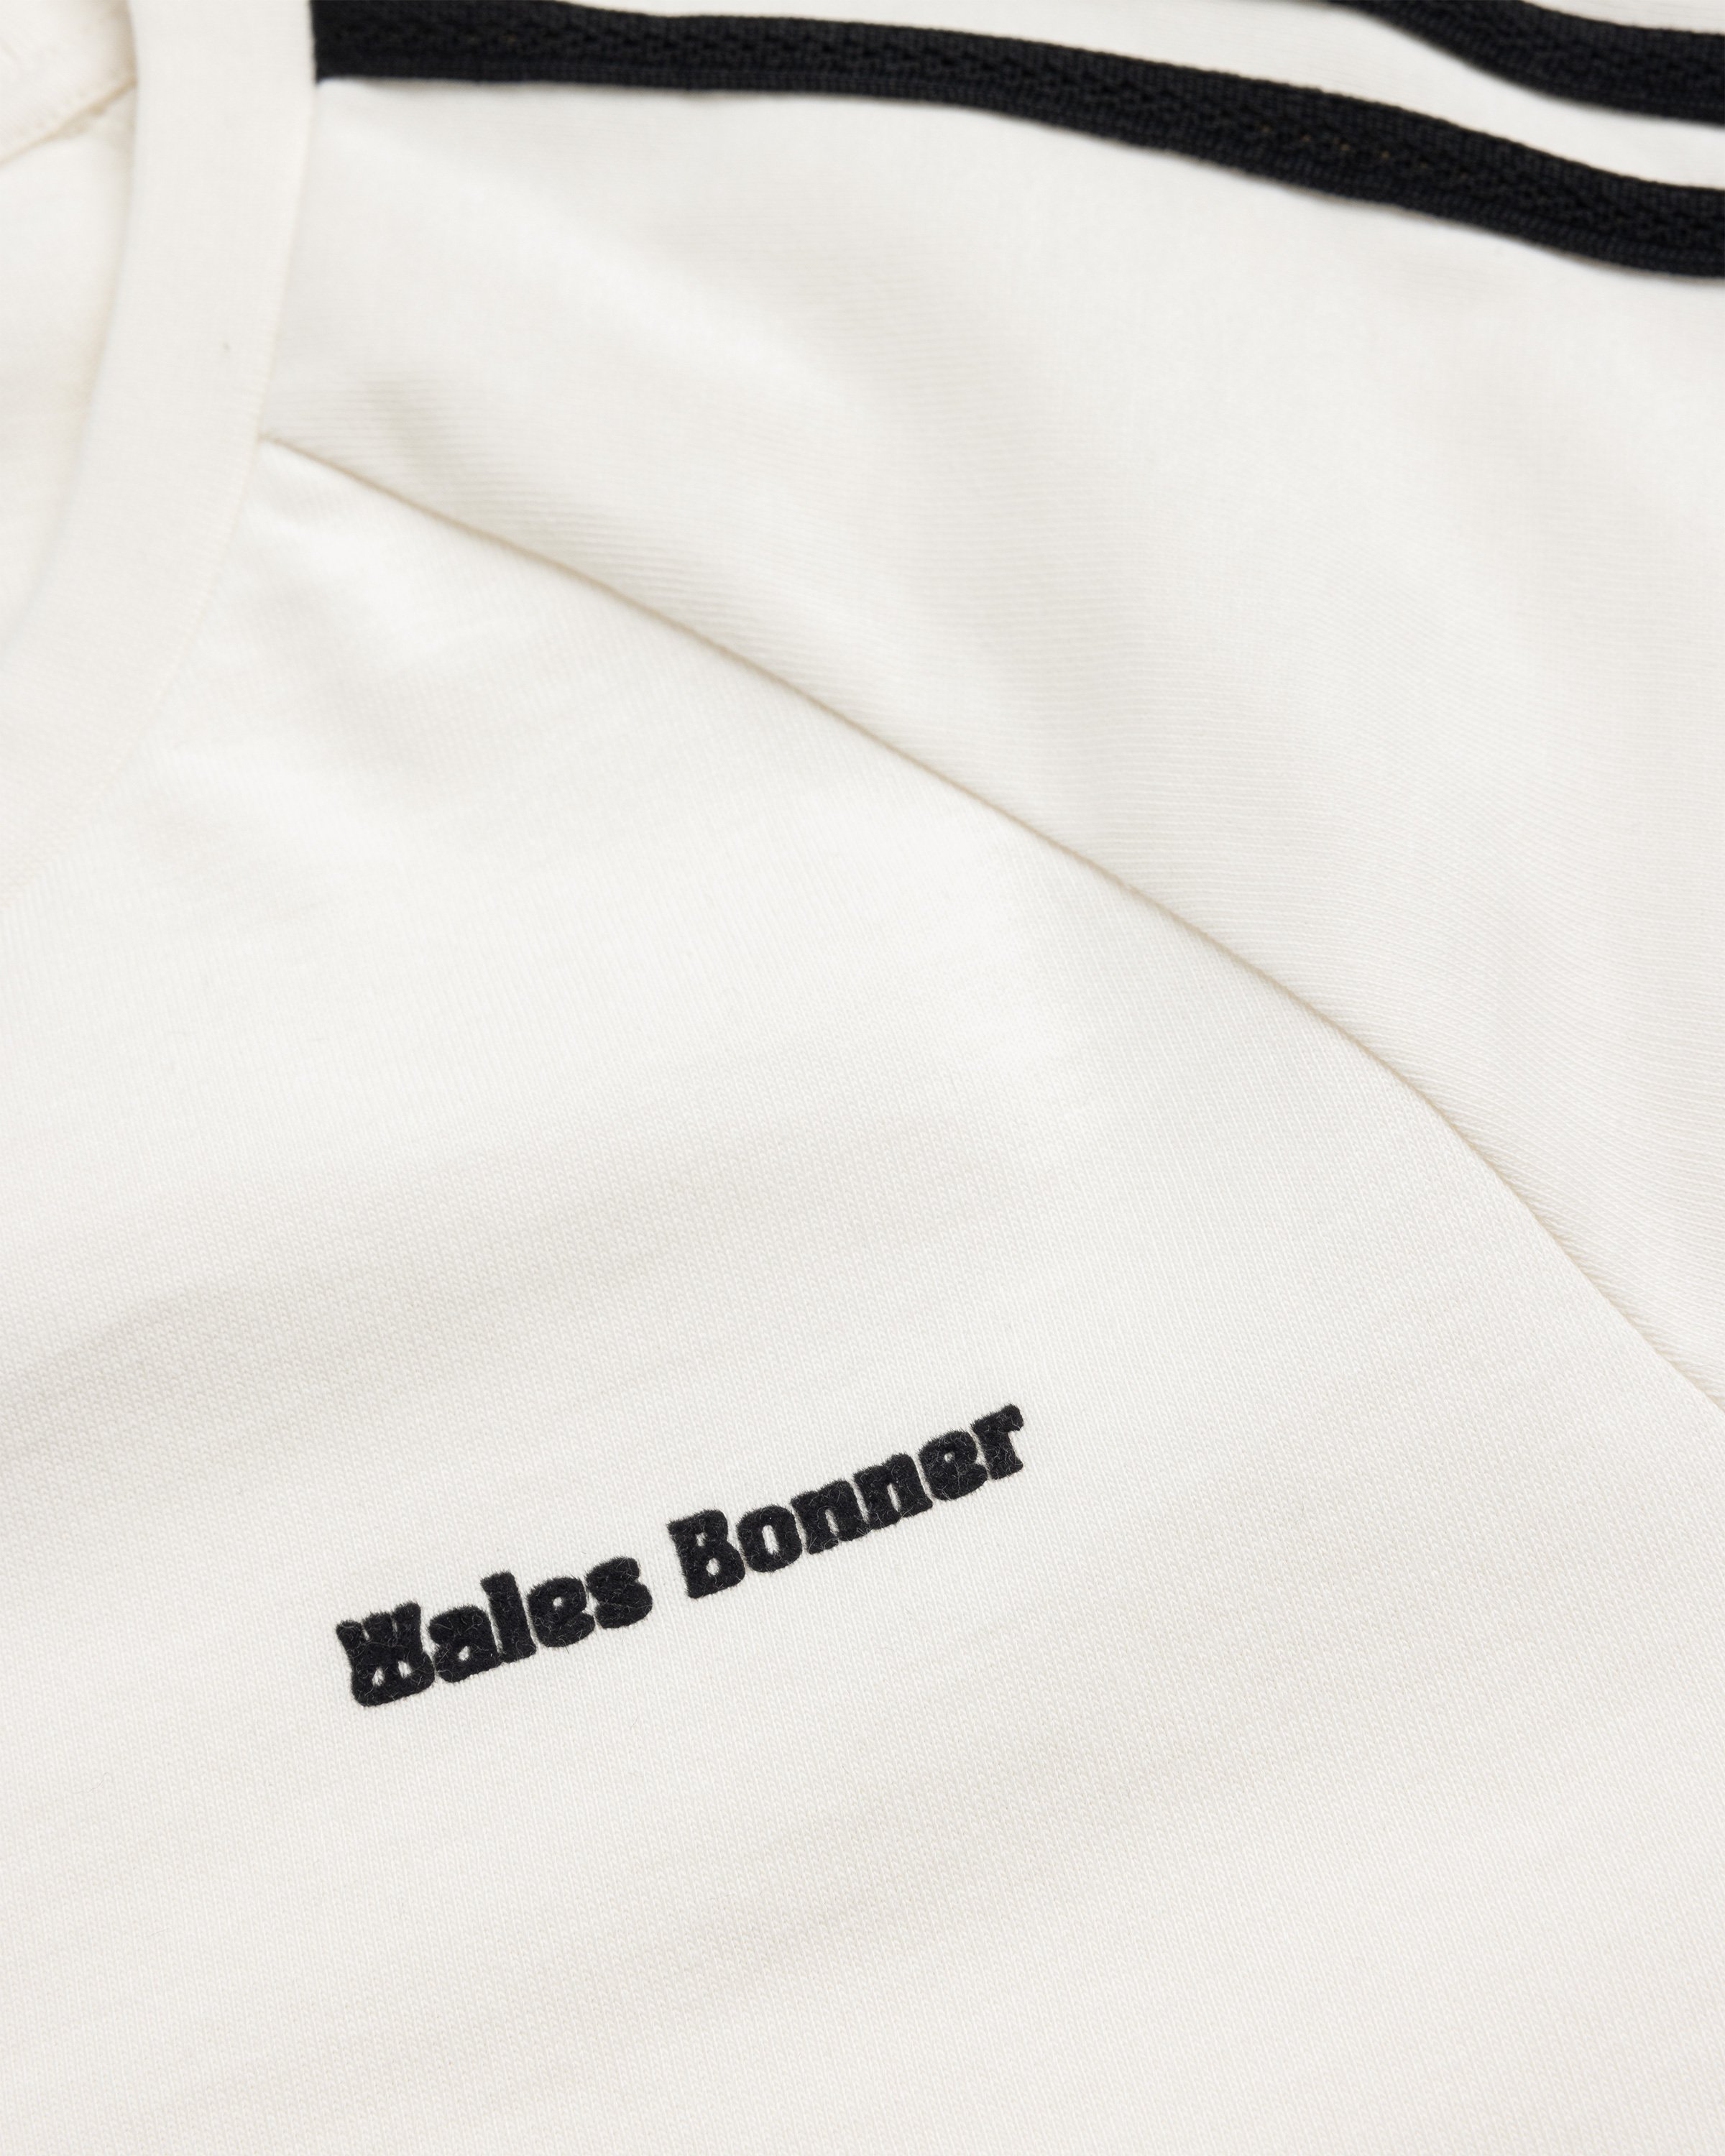 Adidas x Wales Bonner - WB S/S TEE CWHITE - Clothing - White - Image 6